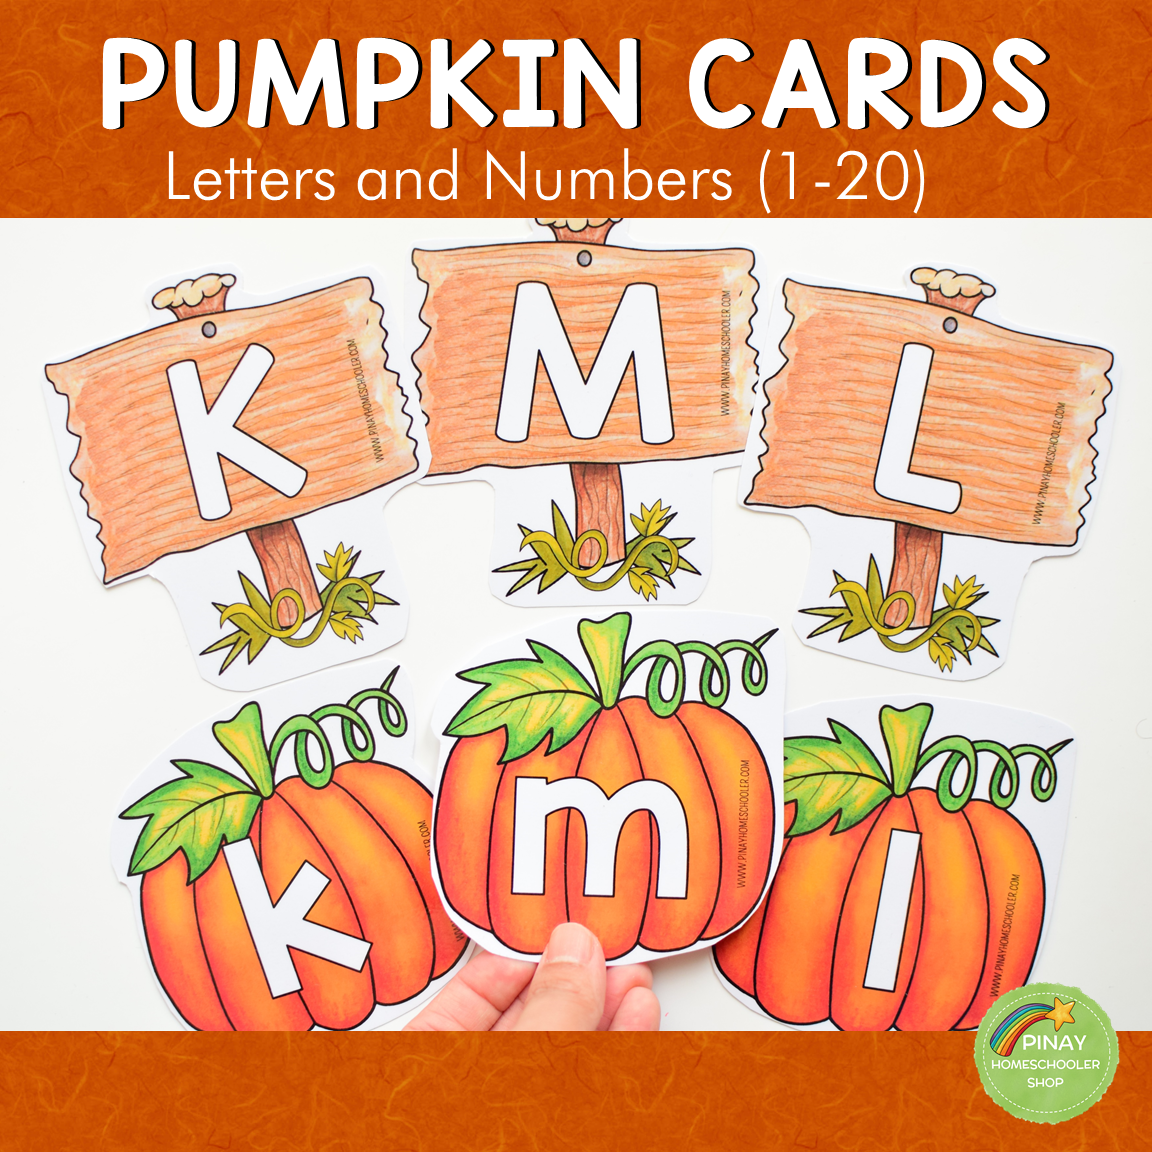 Pumpkin Letter and Number Cards